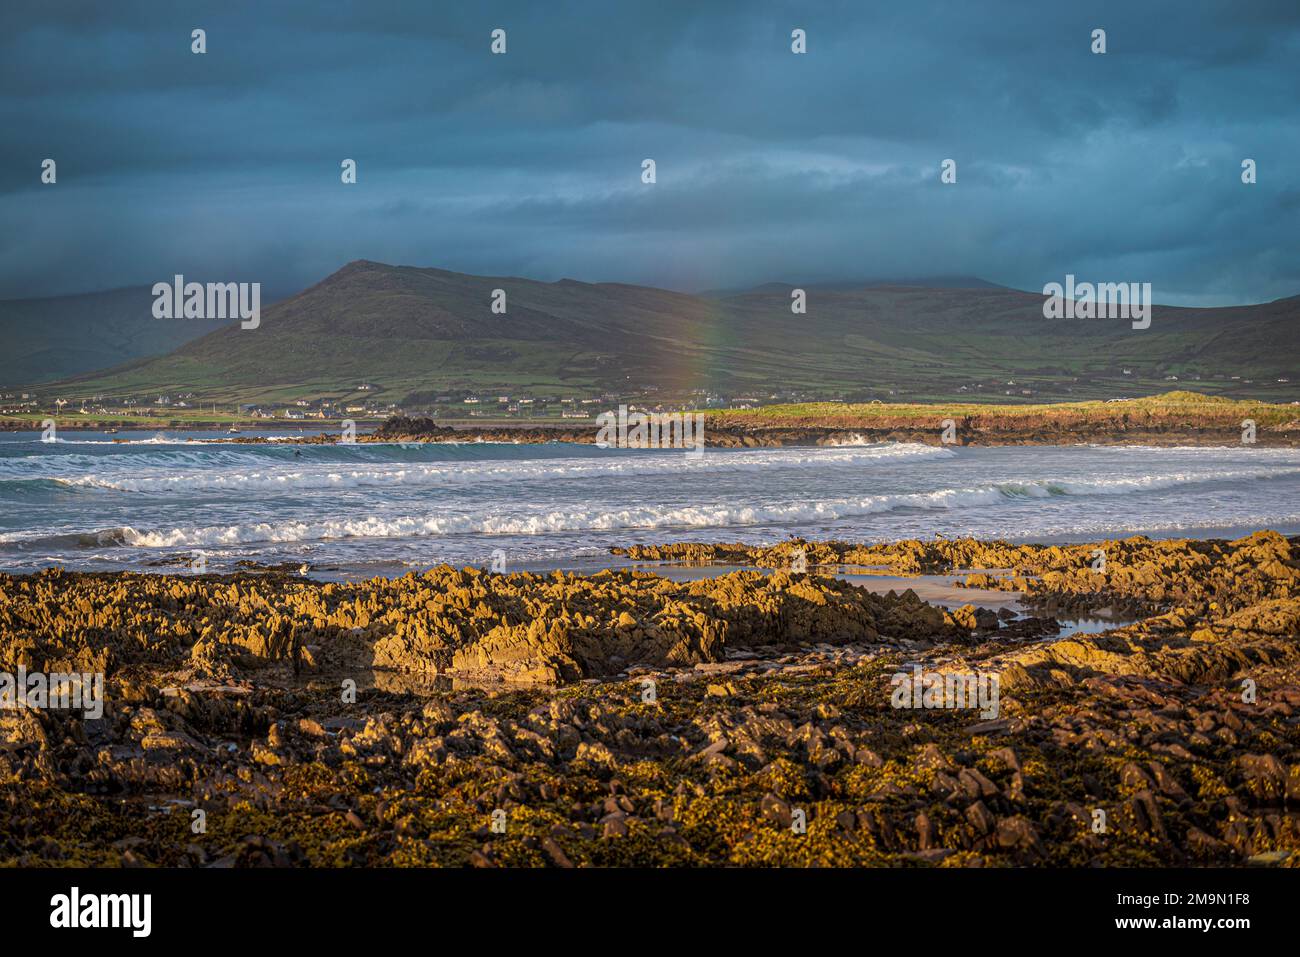 Atlantic Ocean, mountains, beaches, cloudy skies, rainbows, Dingle Peninsula on Ireland’s Wild Atlantic Way, southwest Atlantic coast Stock Photo